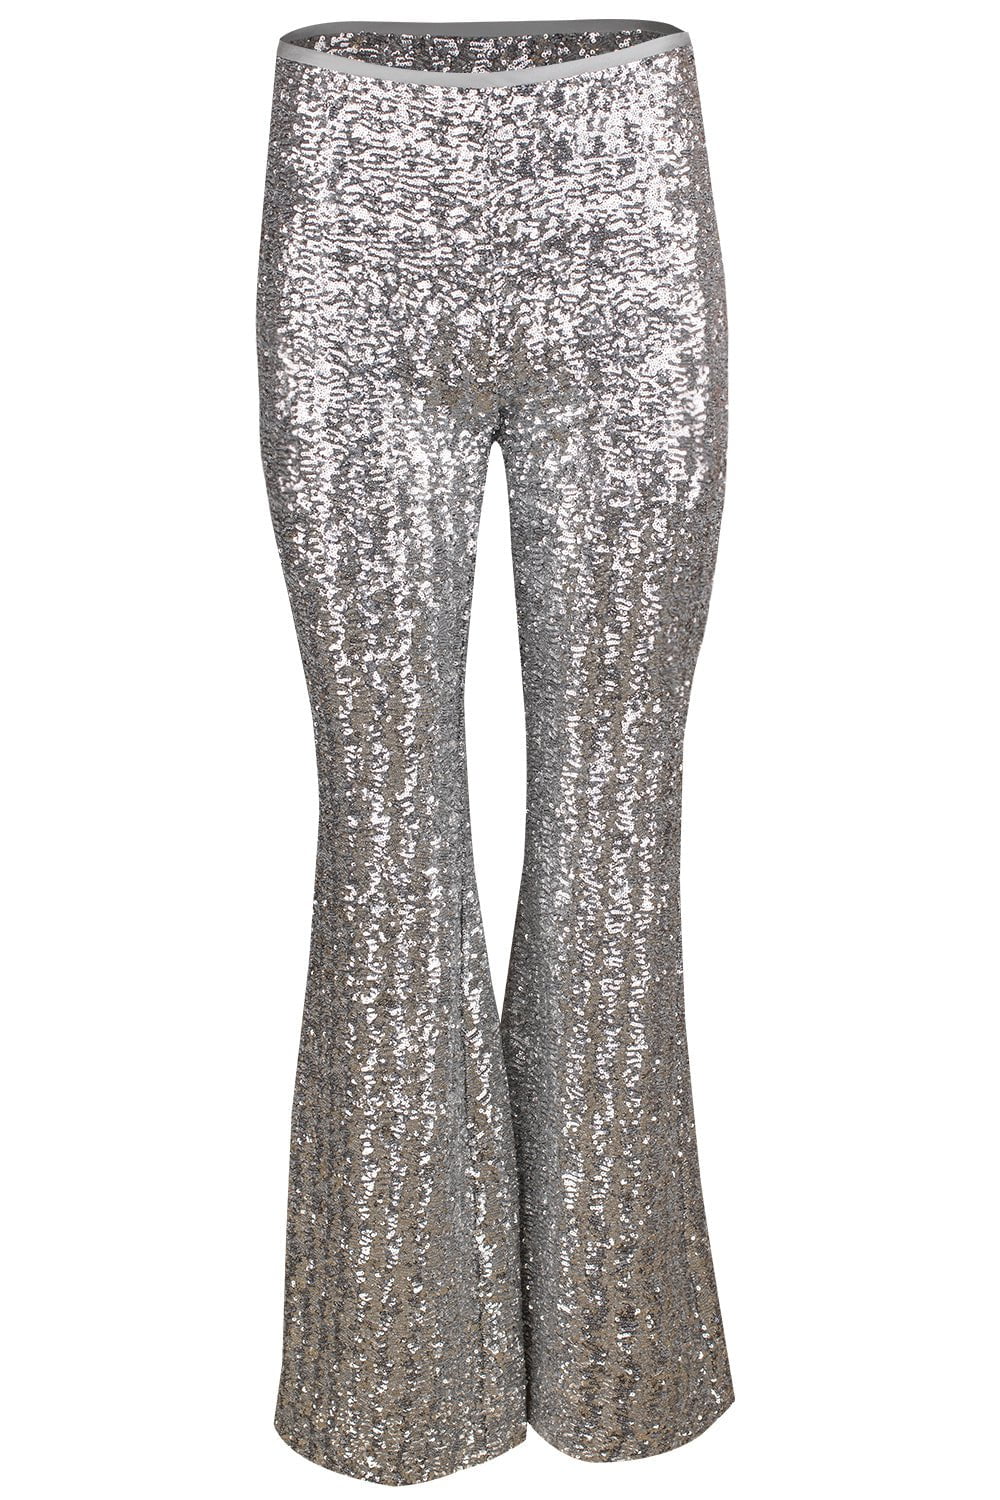 MICHAEL KORS-Side Zip Sequin Flare Pant - Silver-